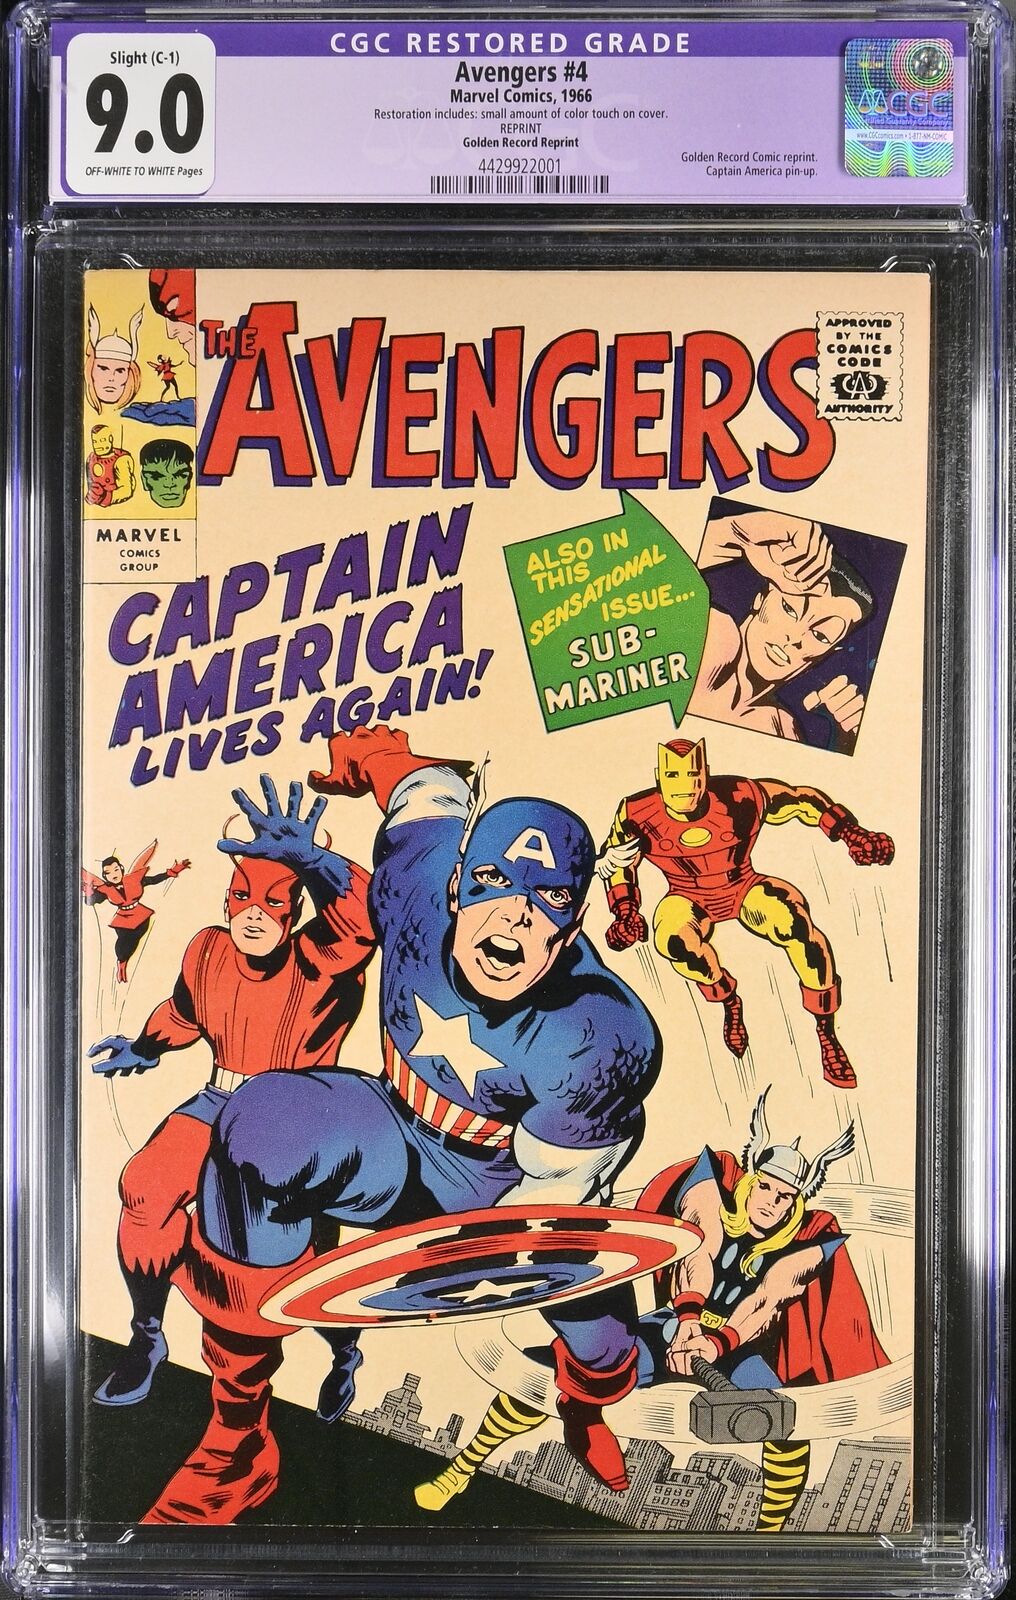 Avengers #4 - Marvel 1966 CGC 9.0 RESTORED Golden Record Comic reprint